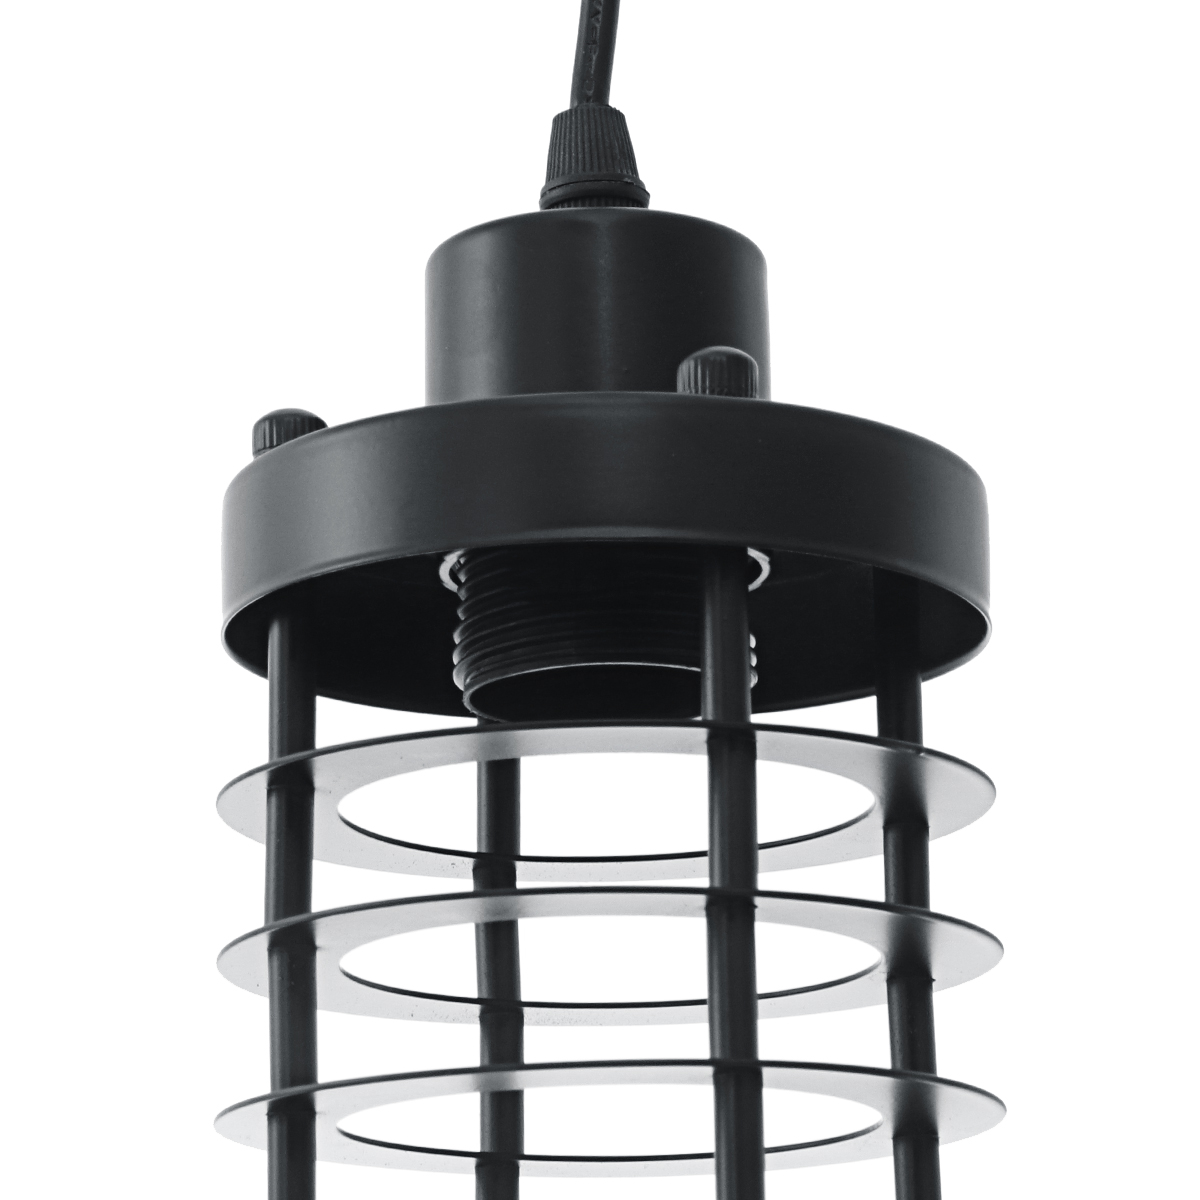 E27-Modern-Iron-Pendant-Light-Ceiling-Lamp-Chandelier-Bedroom-Home-Fixture-Decor-Without-Bulb-1710126-14